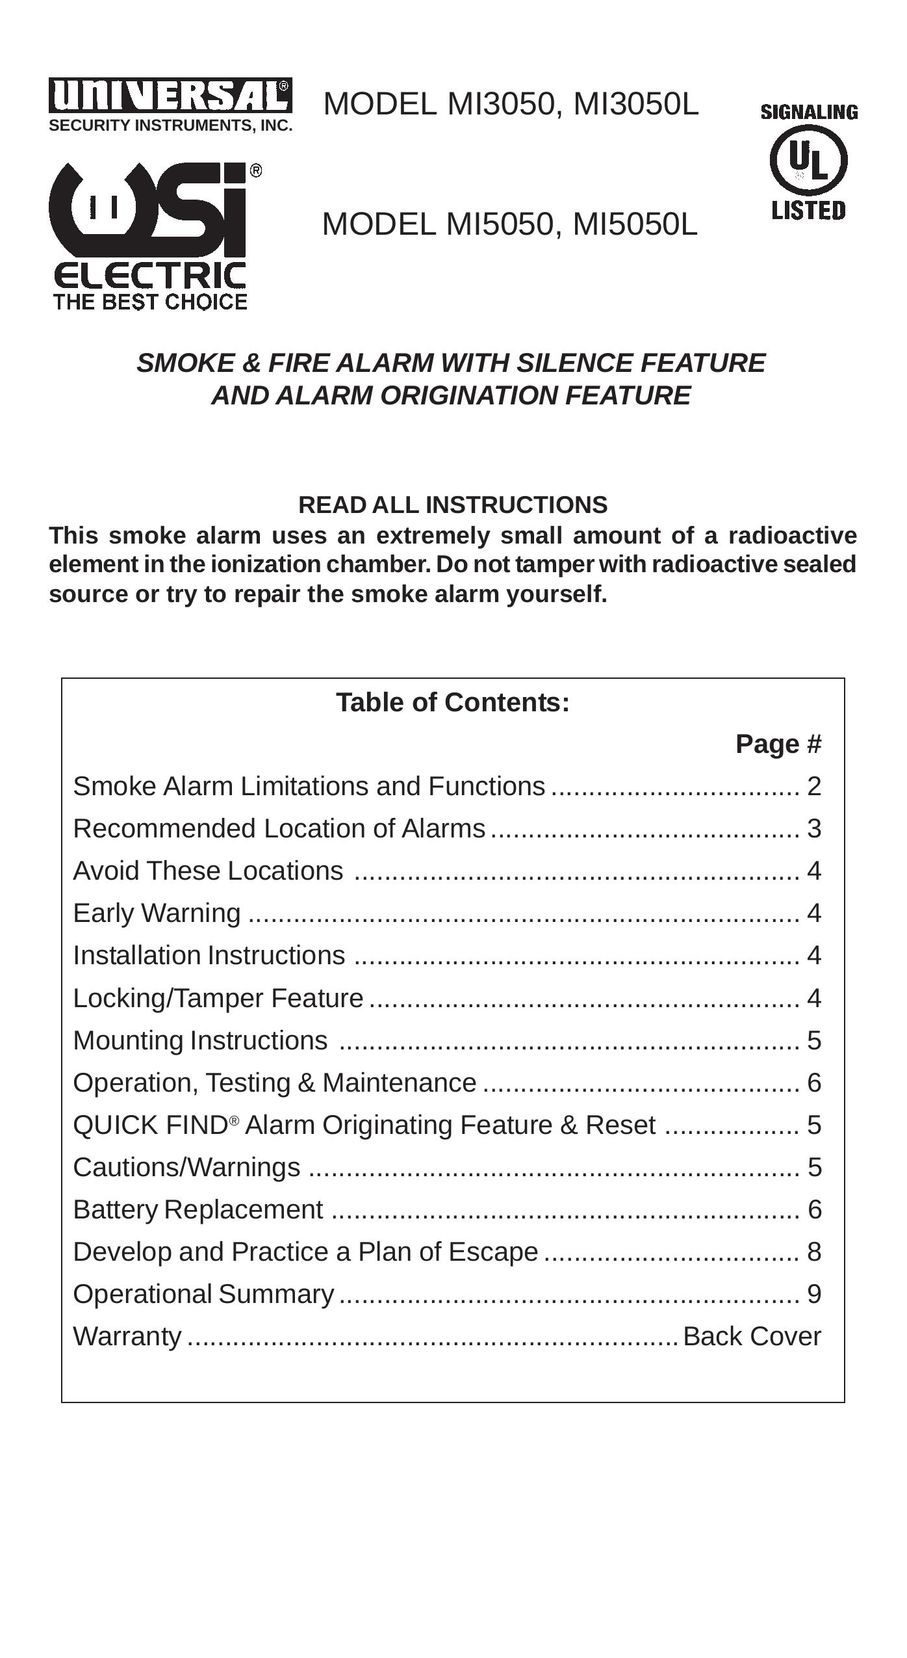 Universal Security Instruments MI3050L Smoke Alarm User Manual